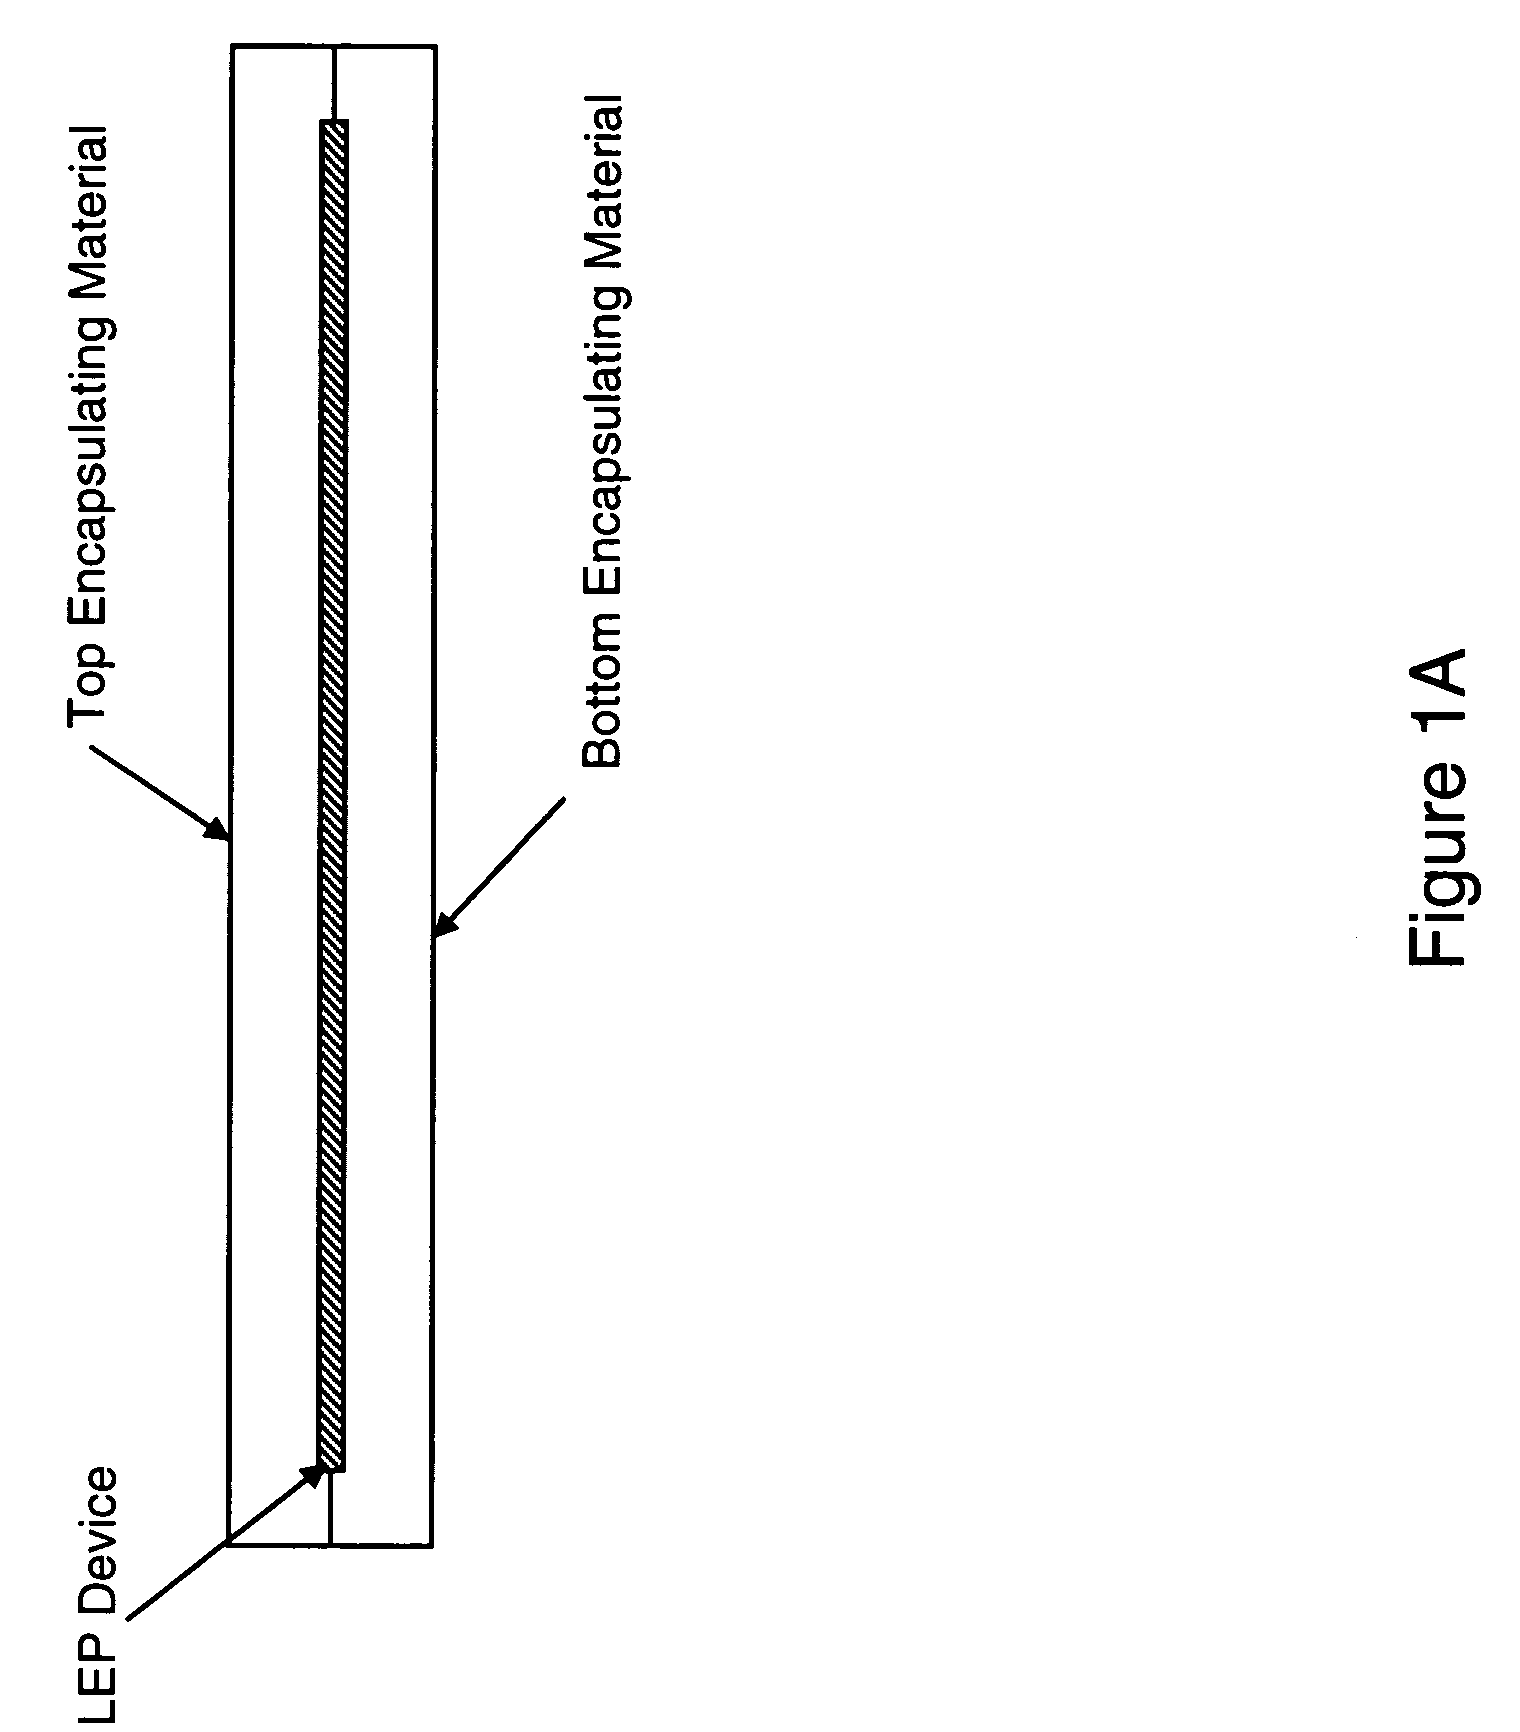 Method for encapsulation of light emitting polymer devices